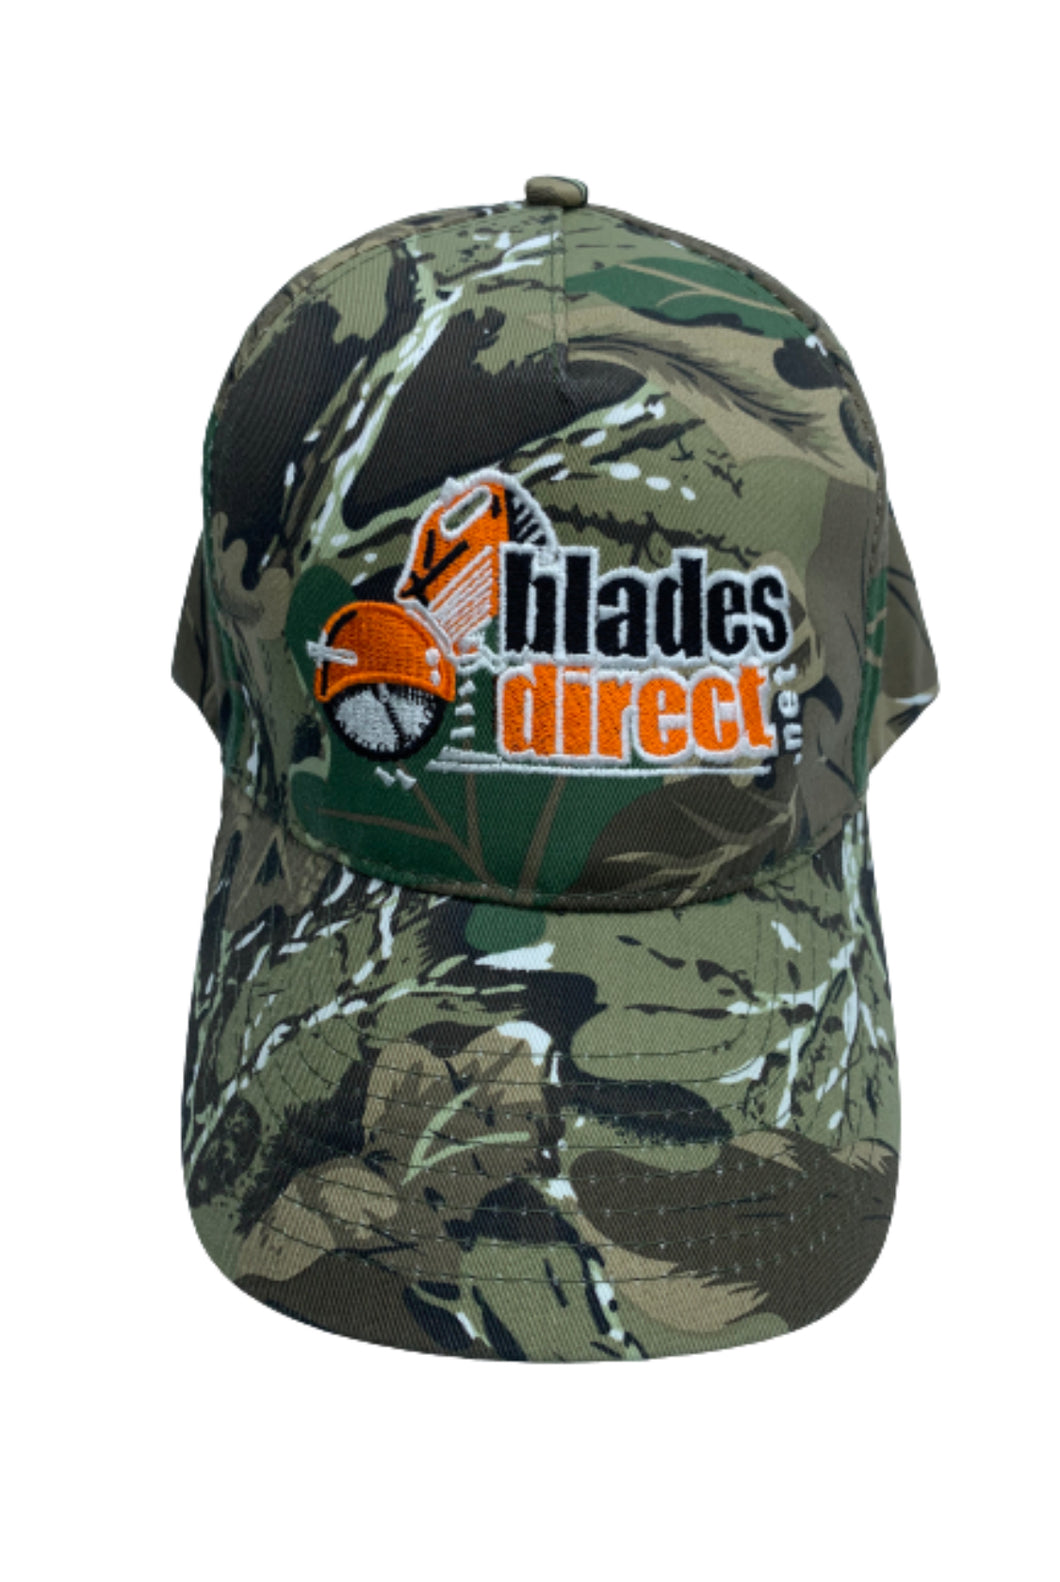 Blades Direct CAMO Hat